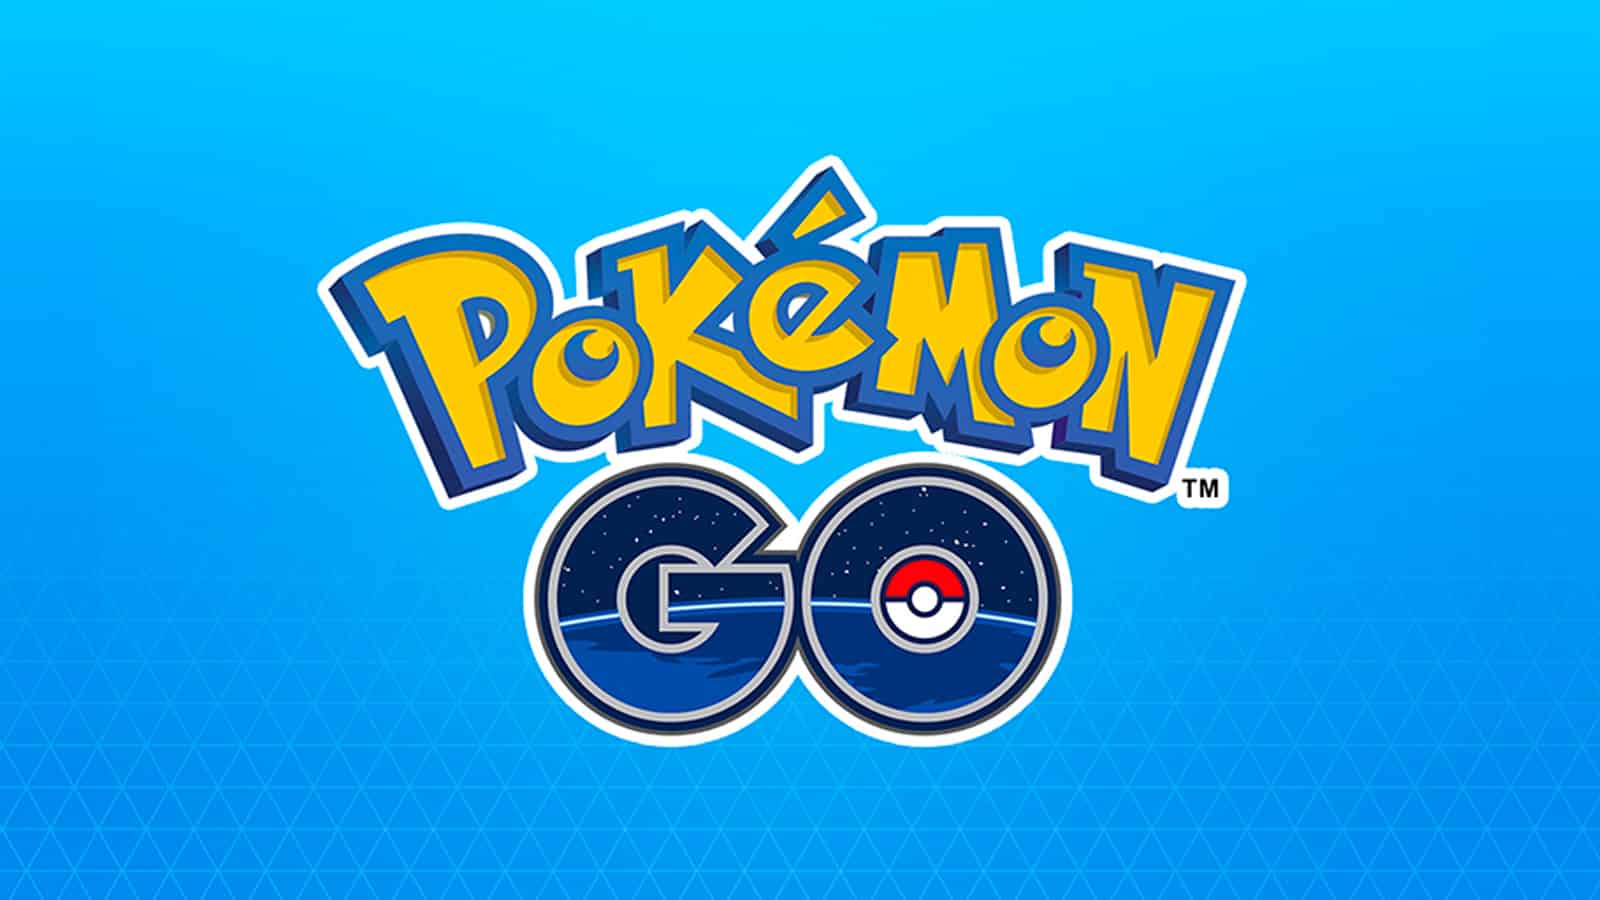 Pokemon go logo